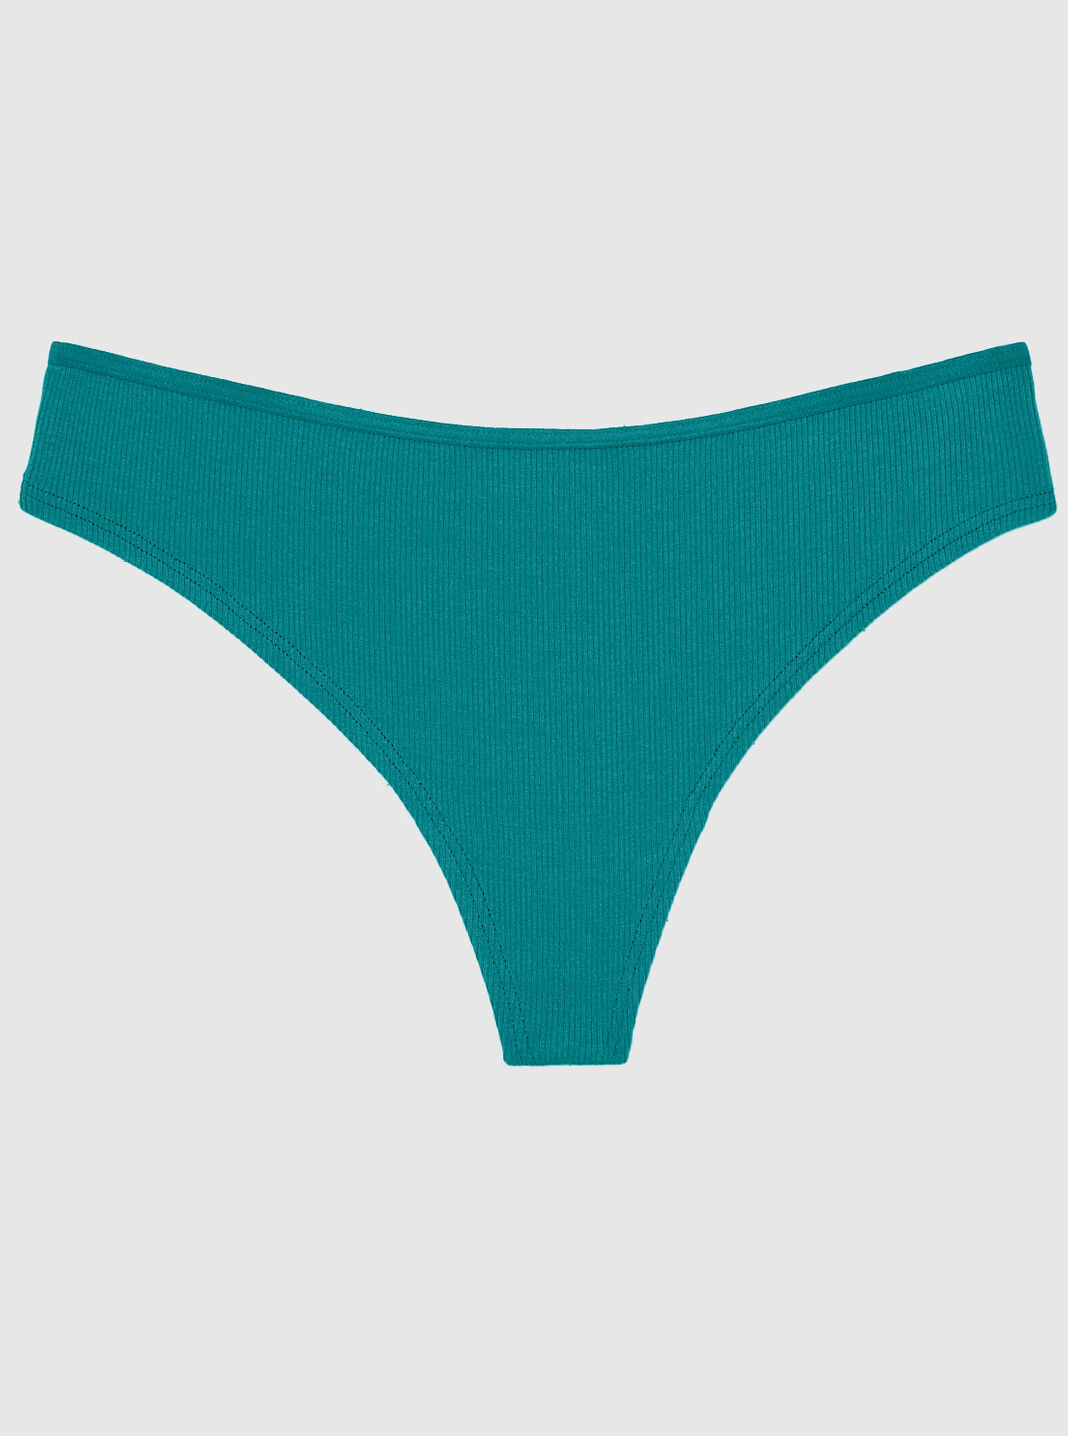 Buy AD2CART A1016 Women's Sexy Solid G-String Thong Bikini T